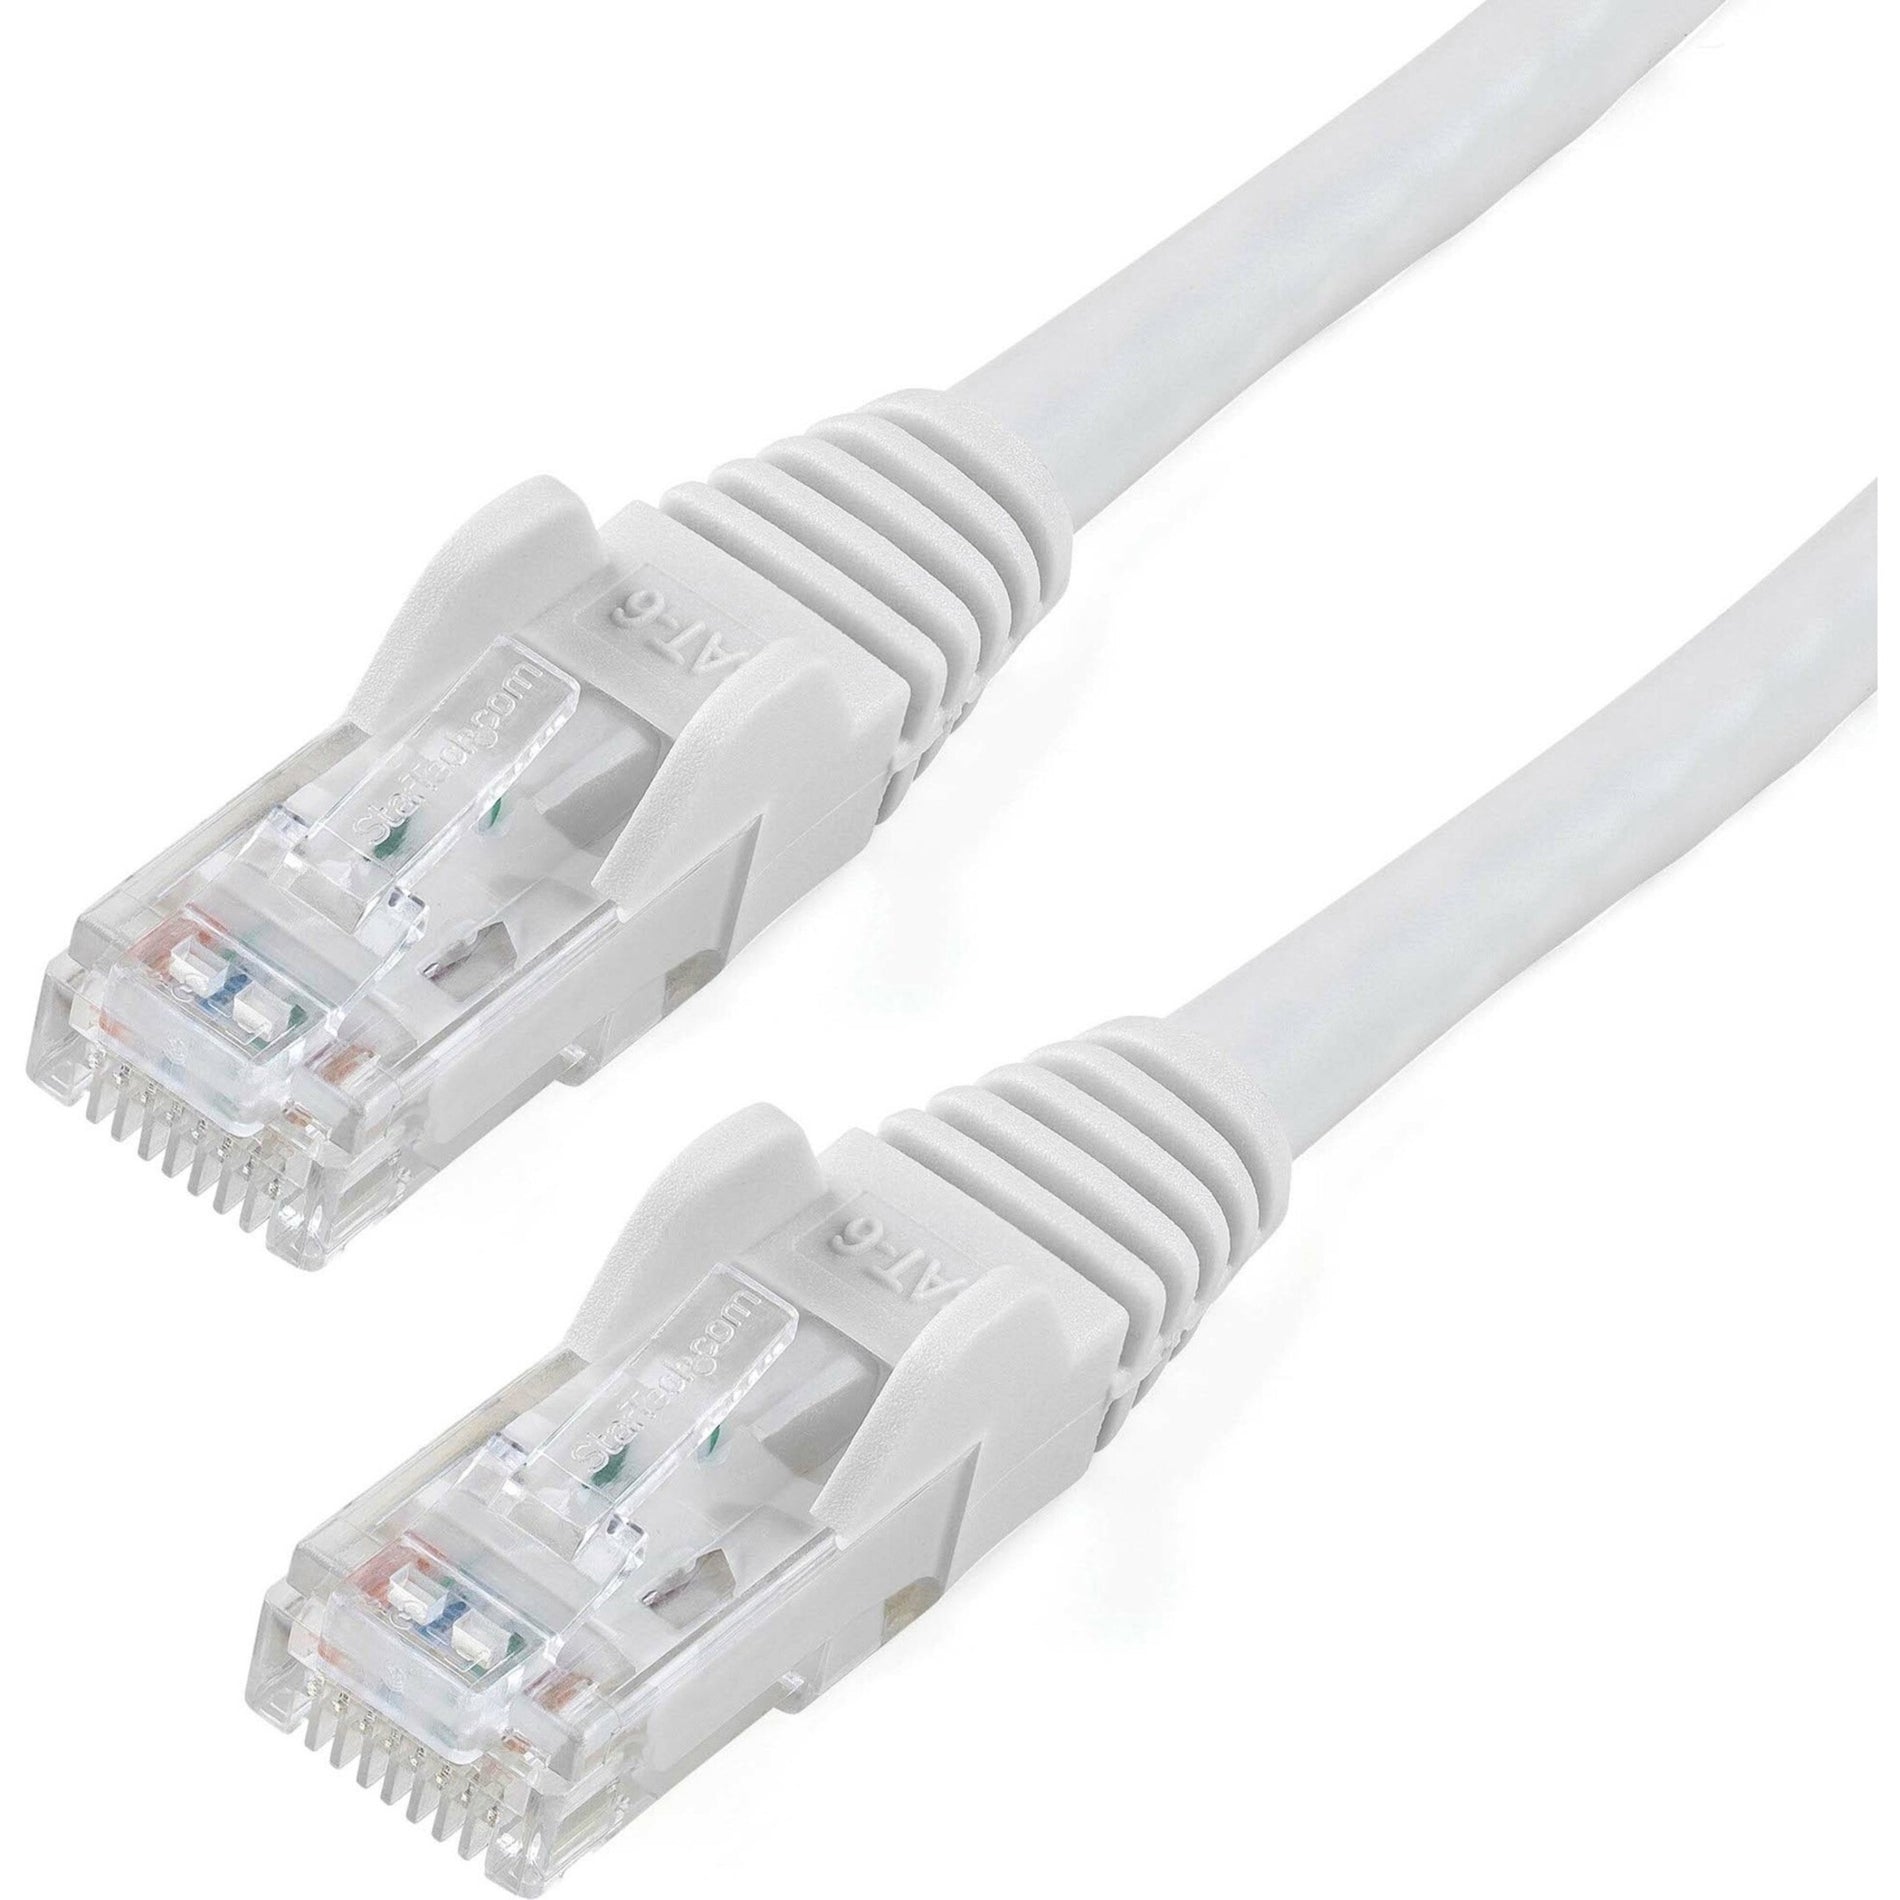 StarTech.com N6PATCH7WH 7 ft White Snagless Cat6 UTP Patch Cable, Lifetime Warranty, ETL Verified